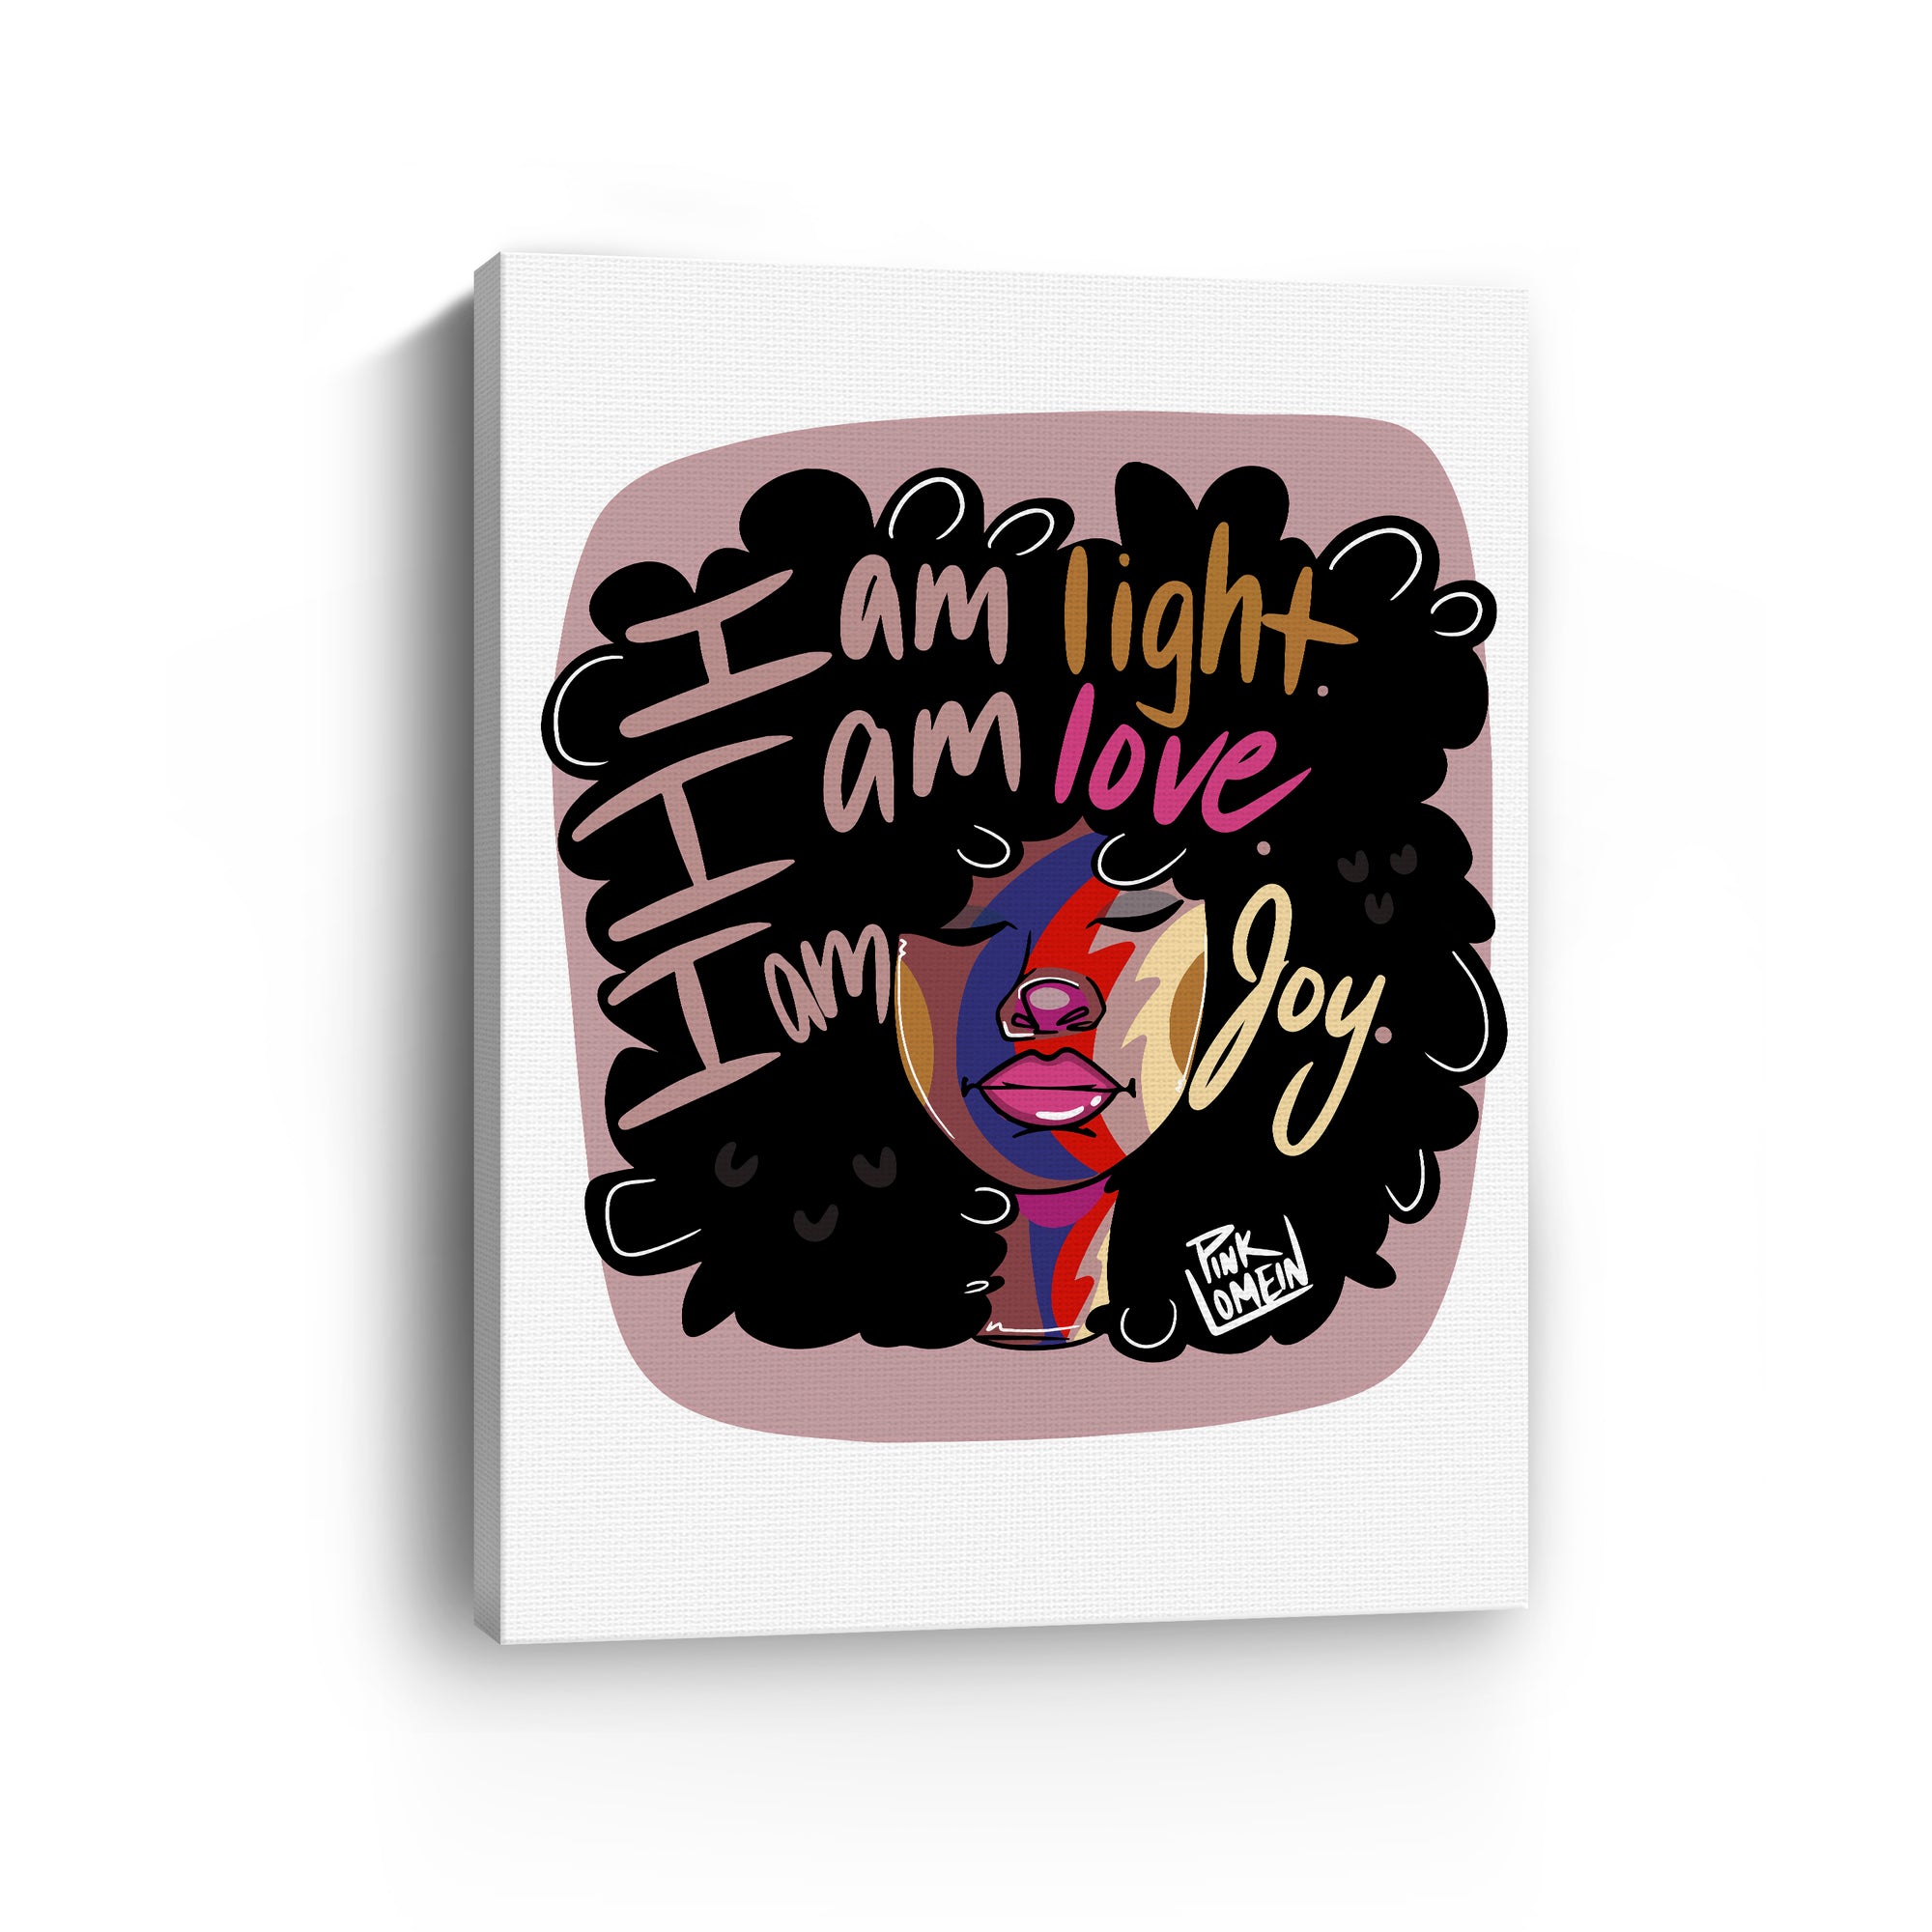 I am Light, Love and Joy Canvas Print